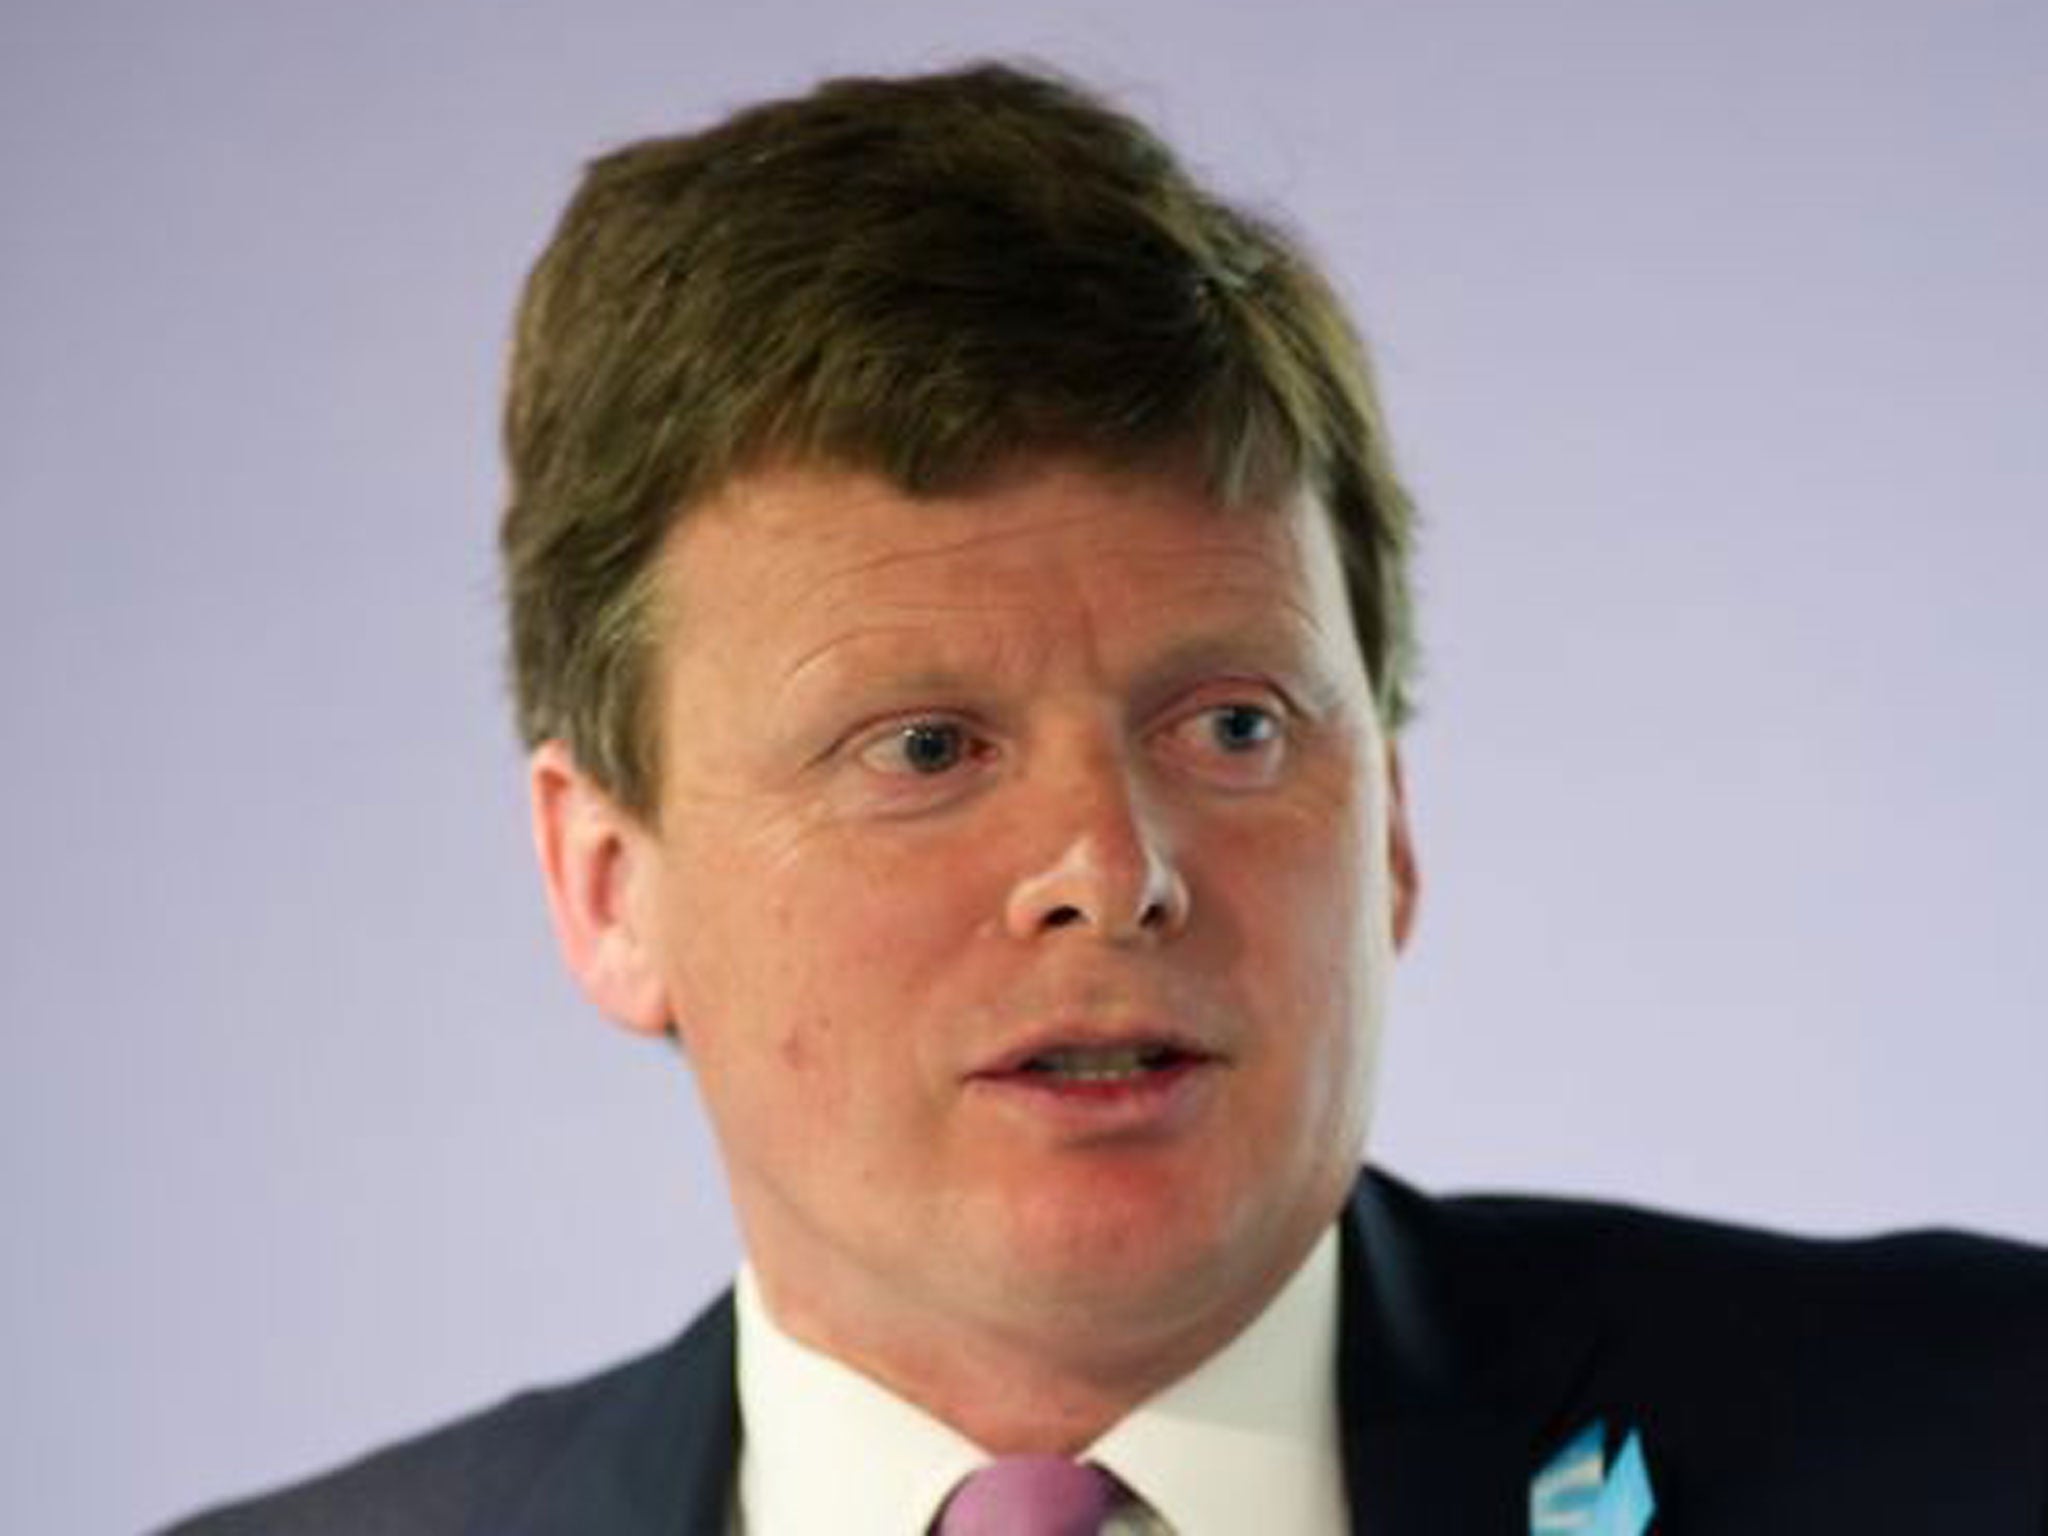 Richard Benyon, the Conservative MP for Newbury lives on an estate that dwarfs Downton